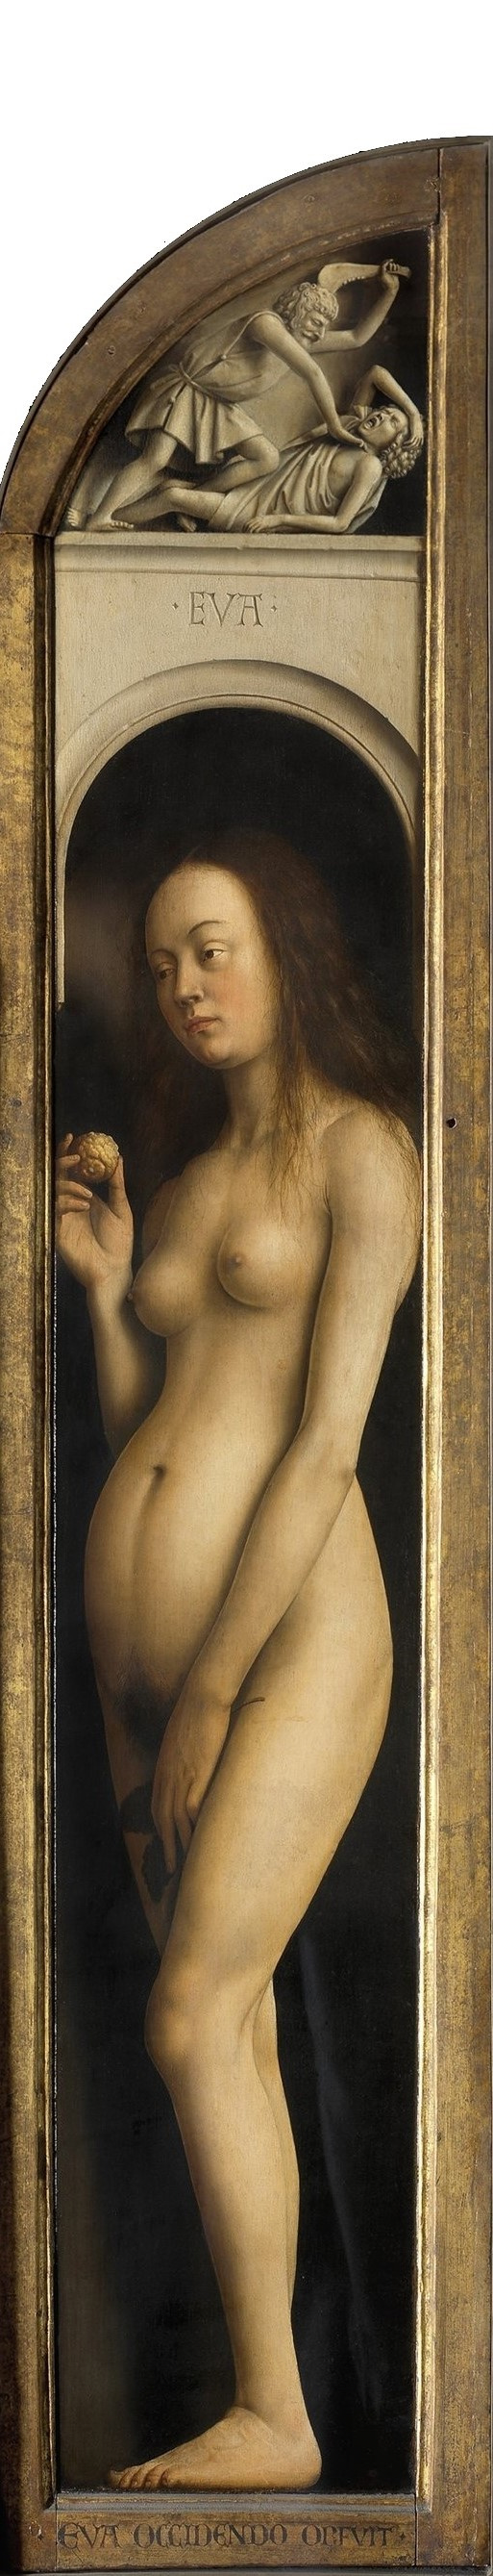 Jan van Eyck. The Ghent altarpiece. Eve (detail)